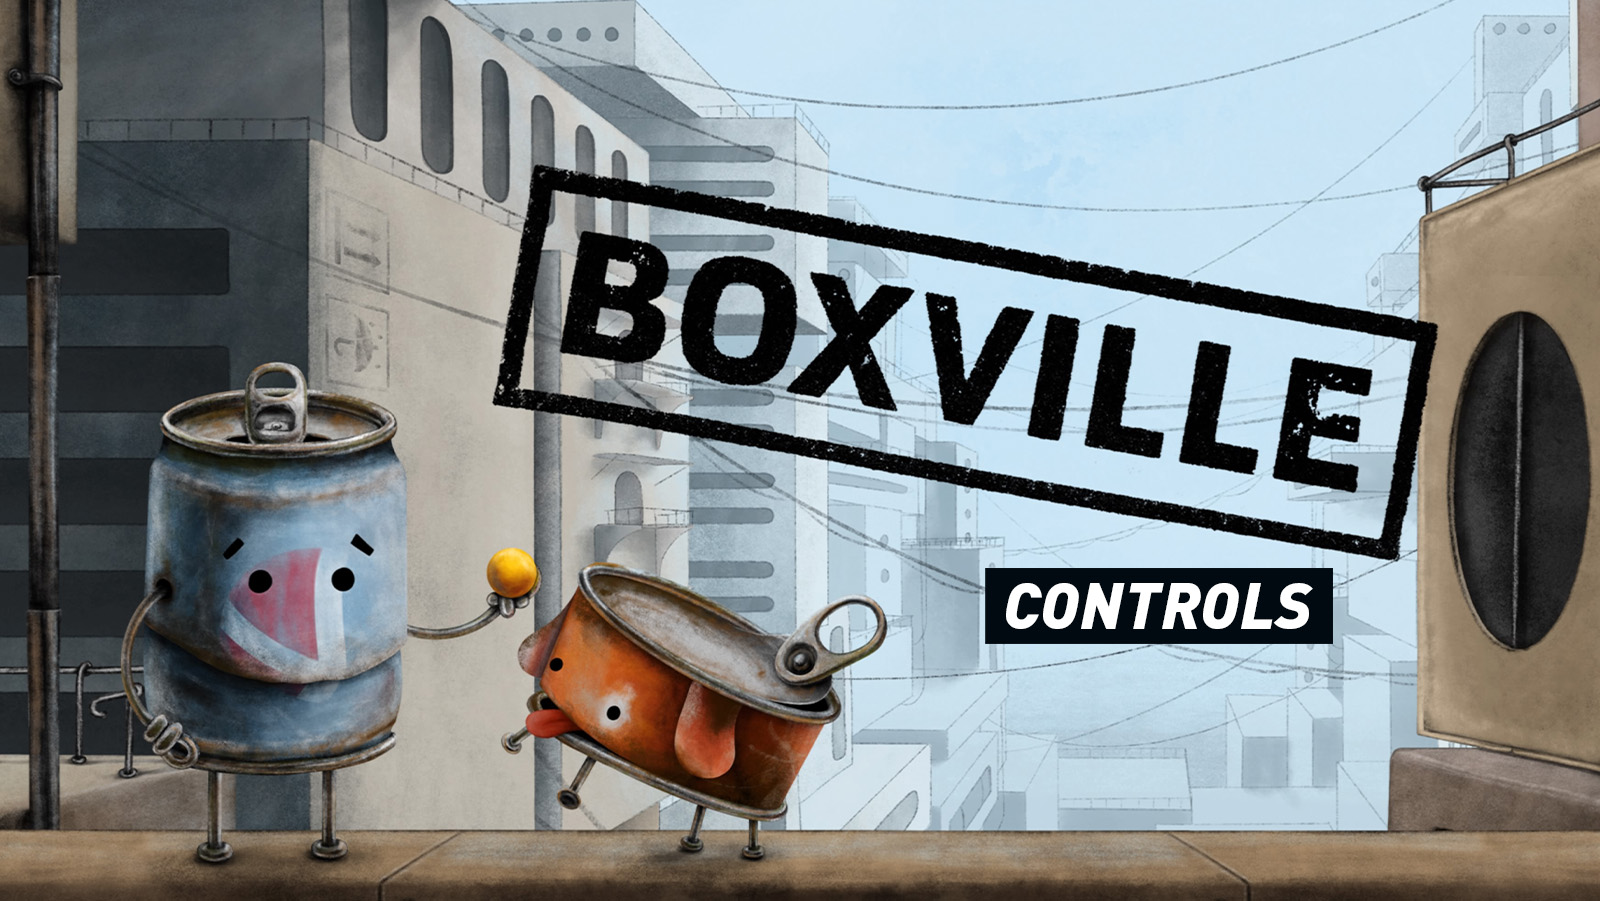 Boxville – Controls